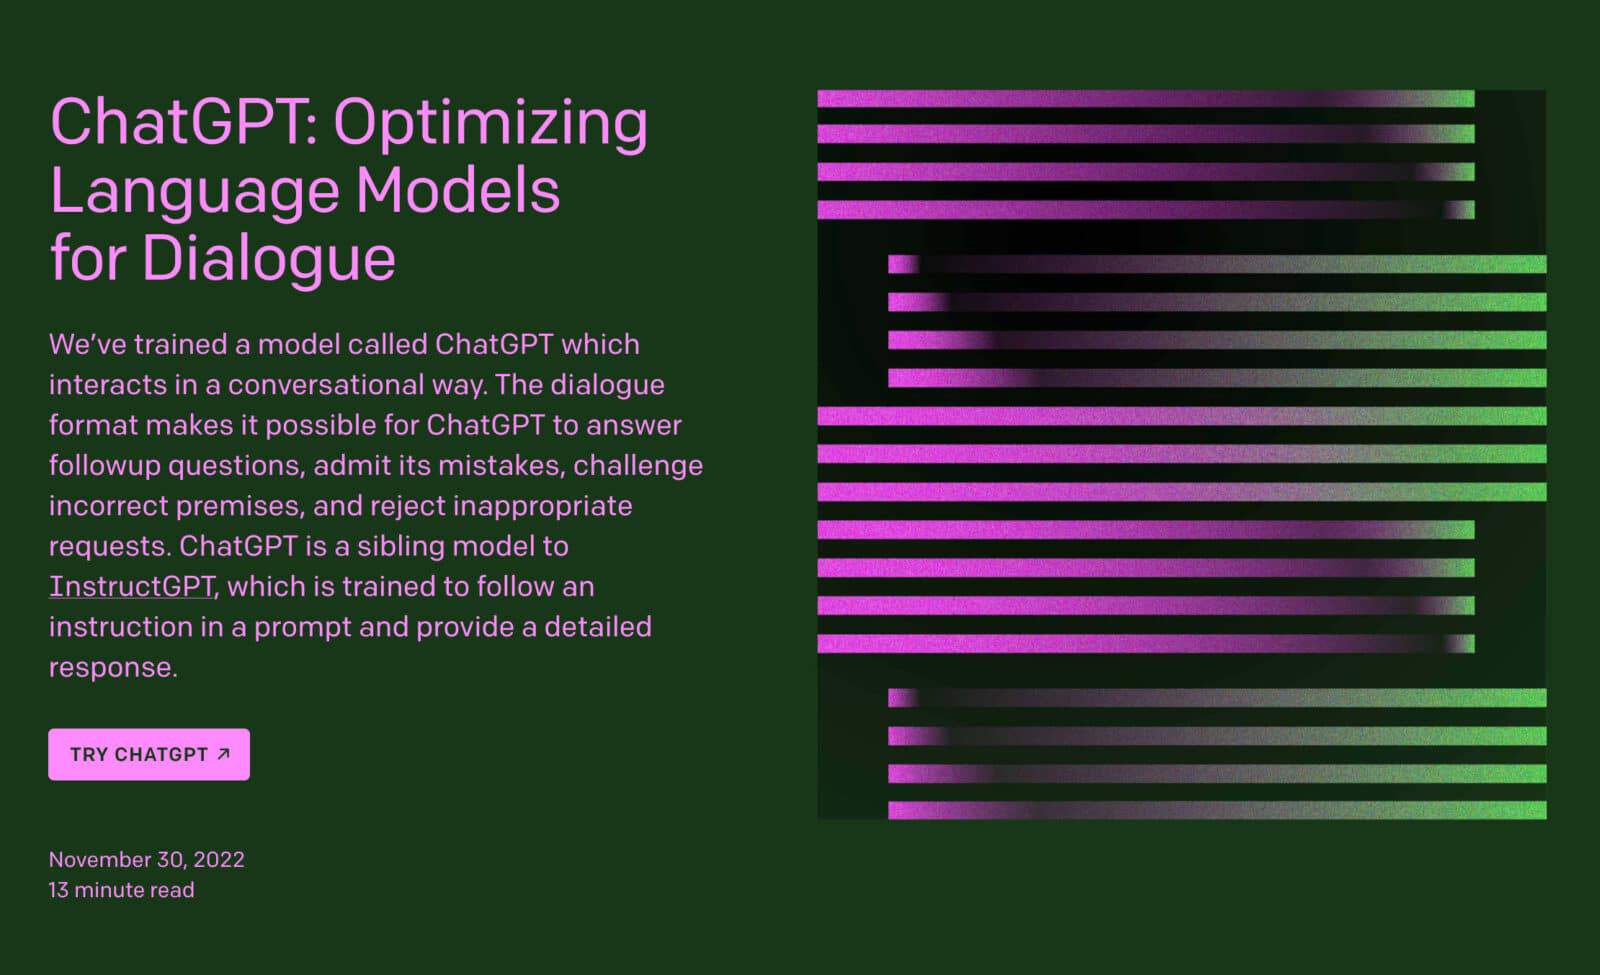 FireShot Capture 034 ChatGPT Optimizing Language Models for Dialogue openai.com